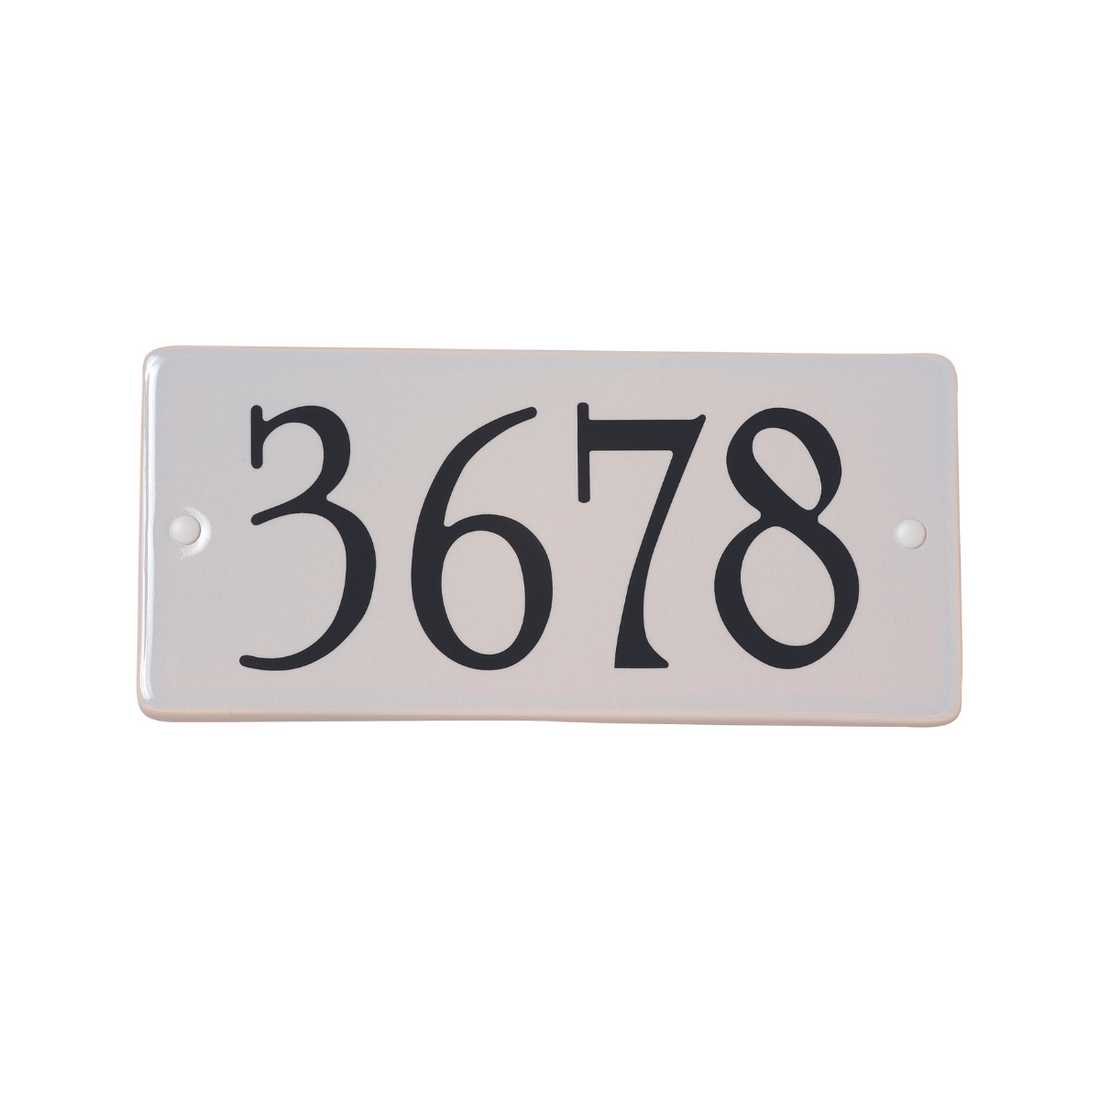 DeVille - Rectangle horizontal ceramic address plaque - 1720